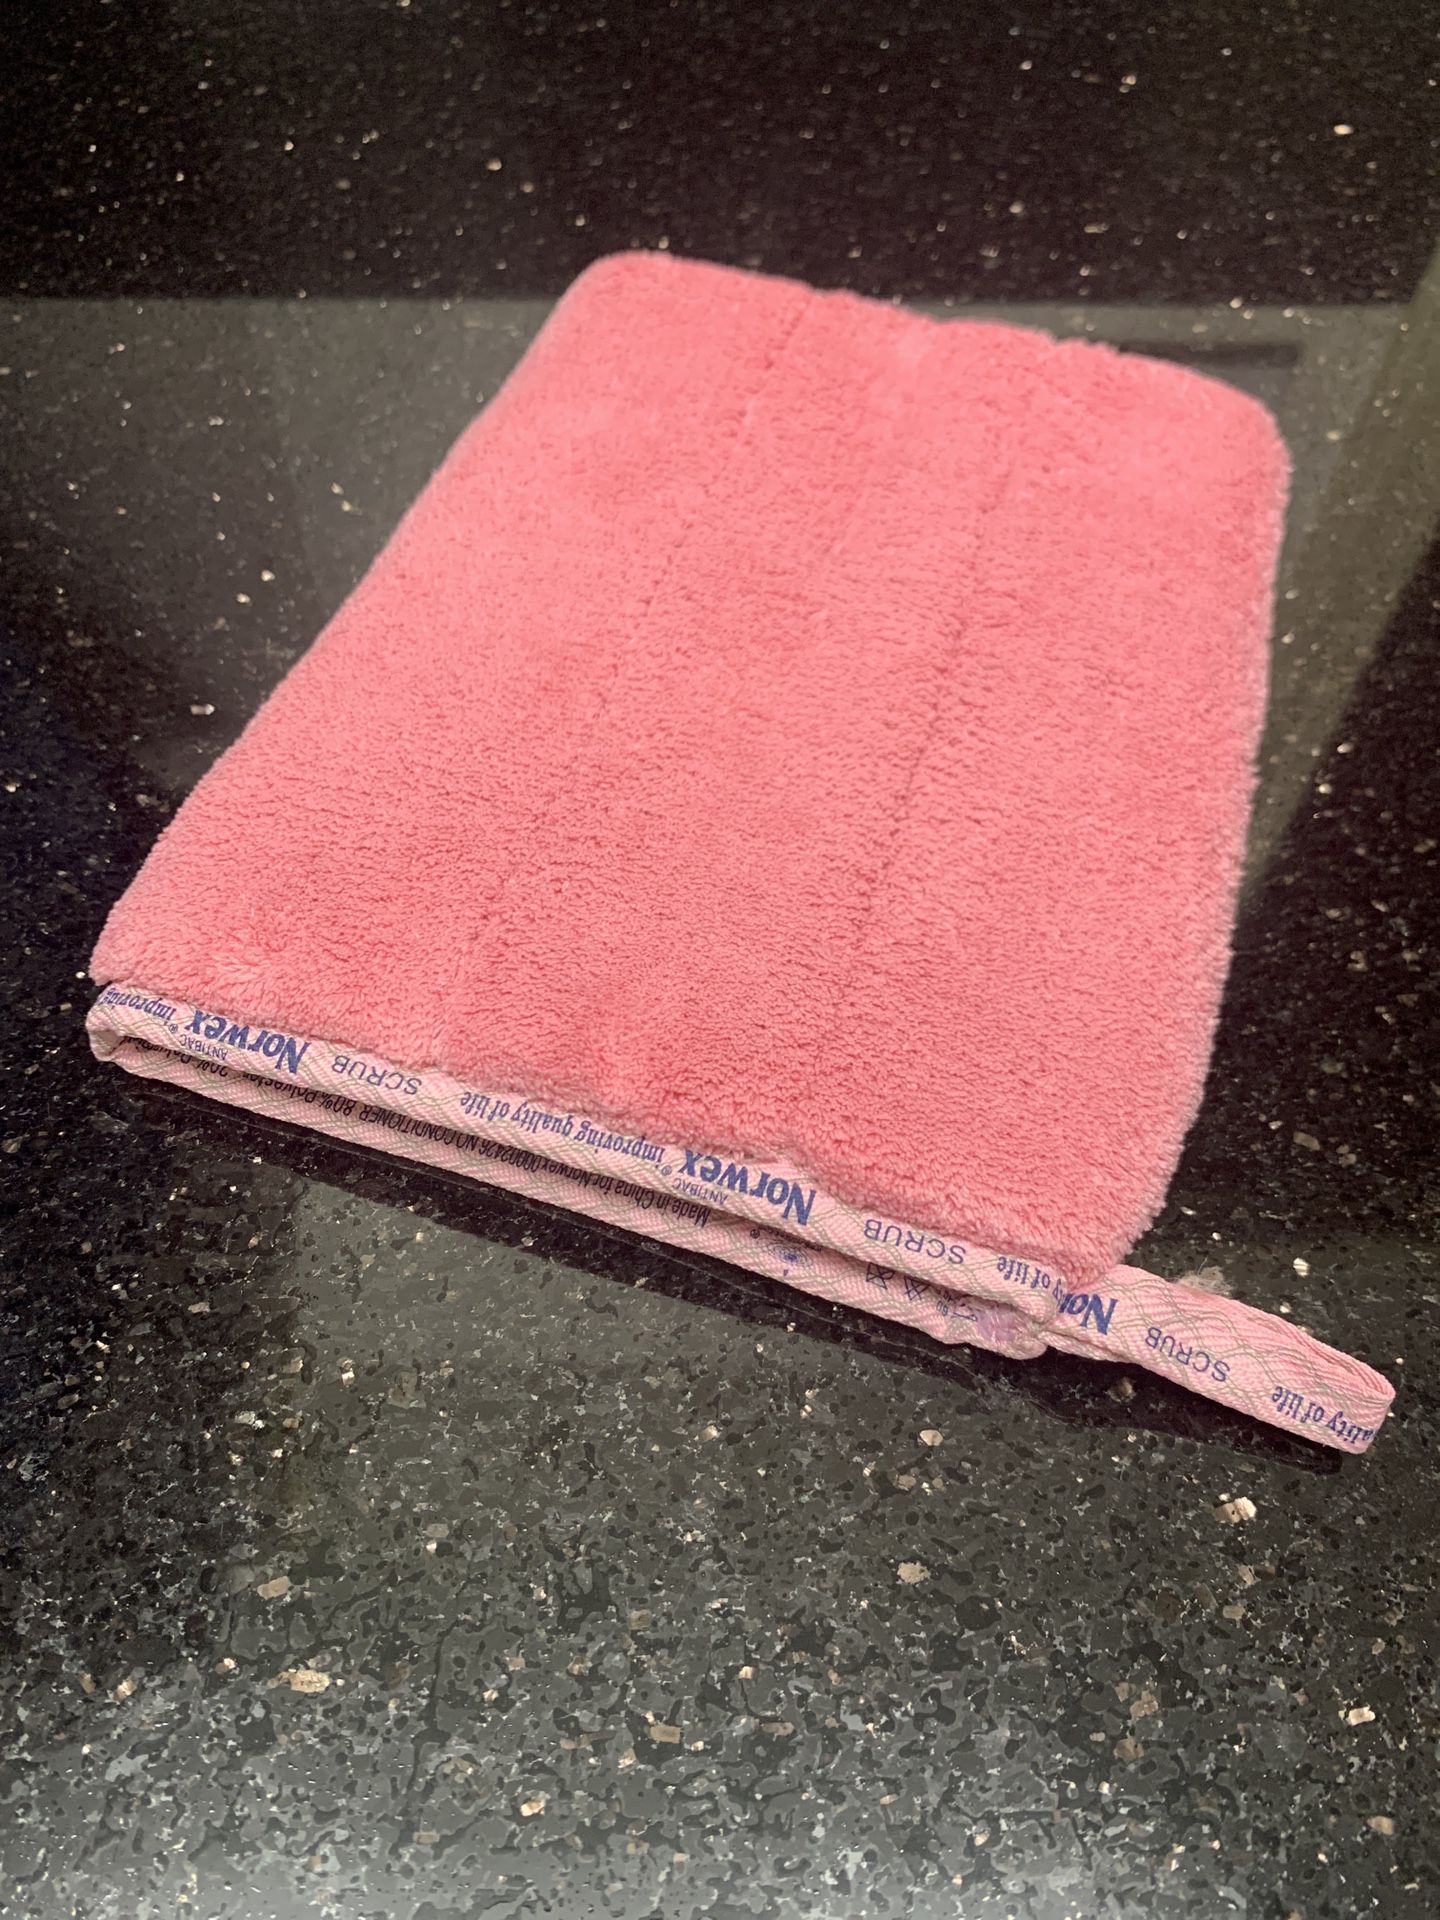 Norwex microfiber bathroom scrub mitt, Pink. New